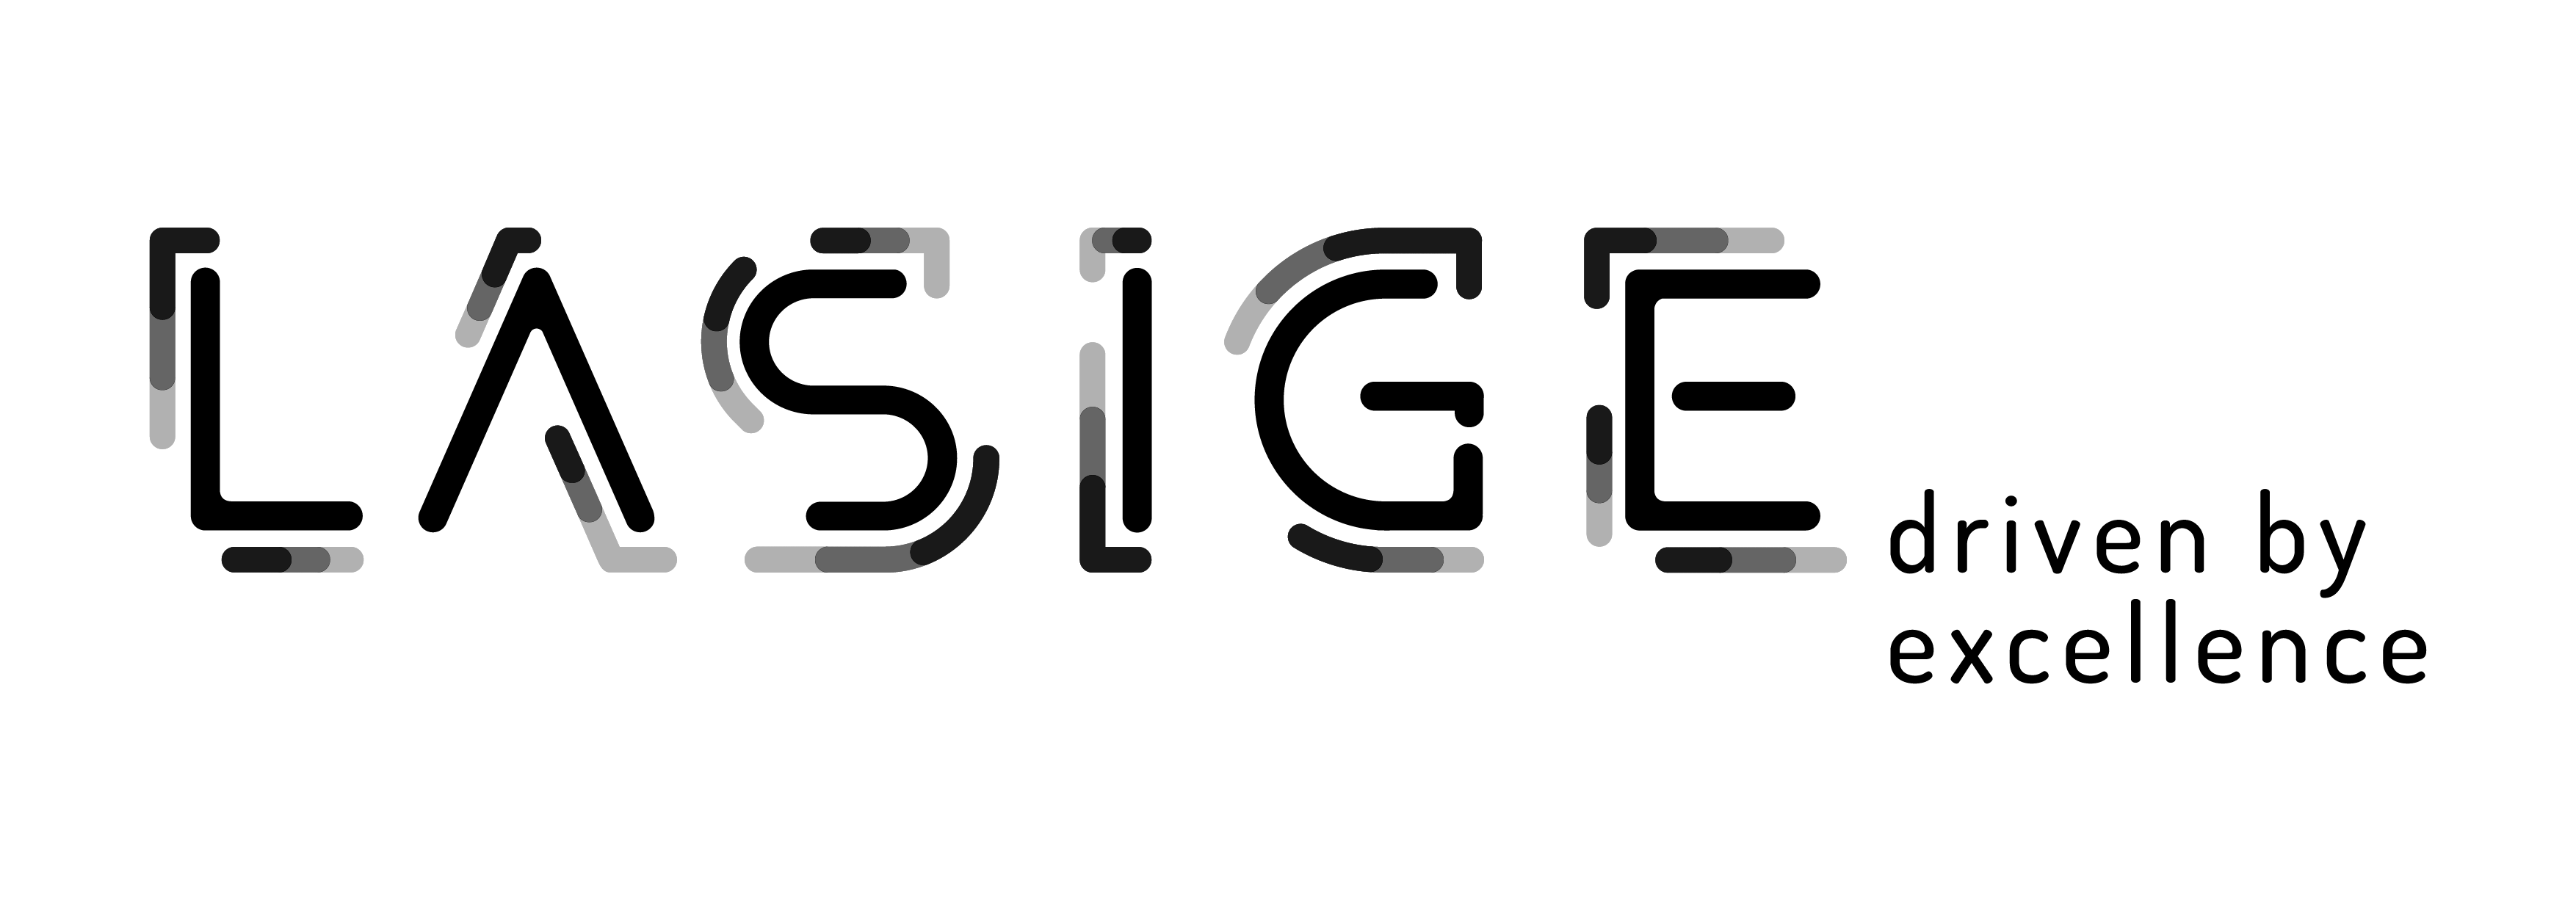 lasige logo